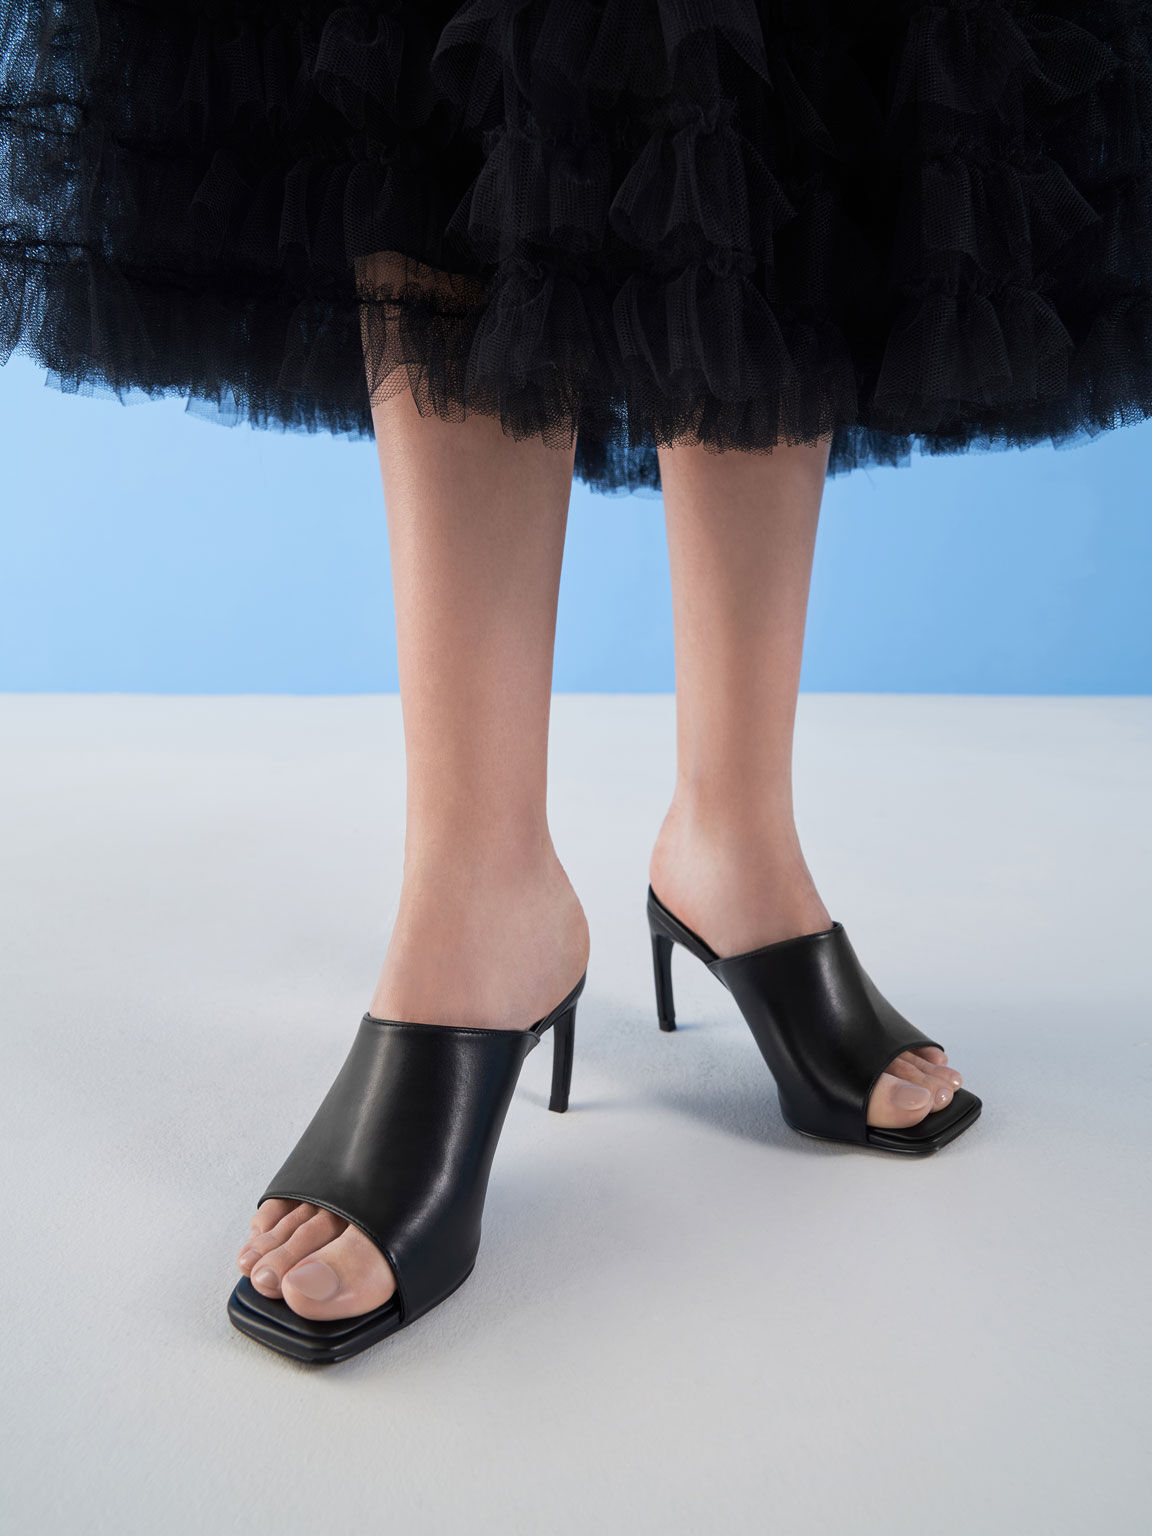 Sepatu Mules Heel Open Toe Curved, Black, hi-res